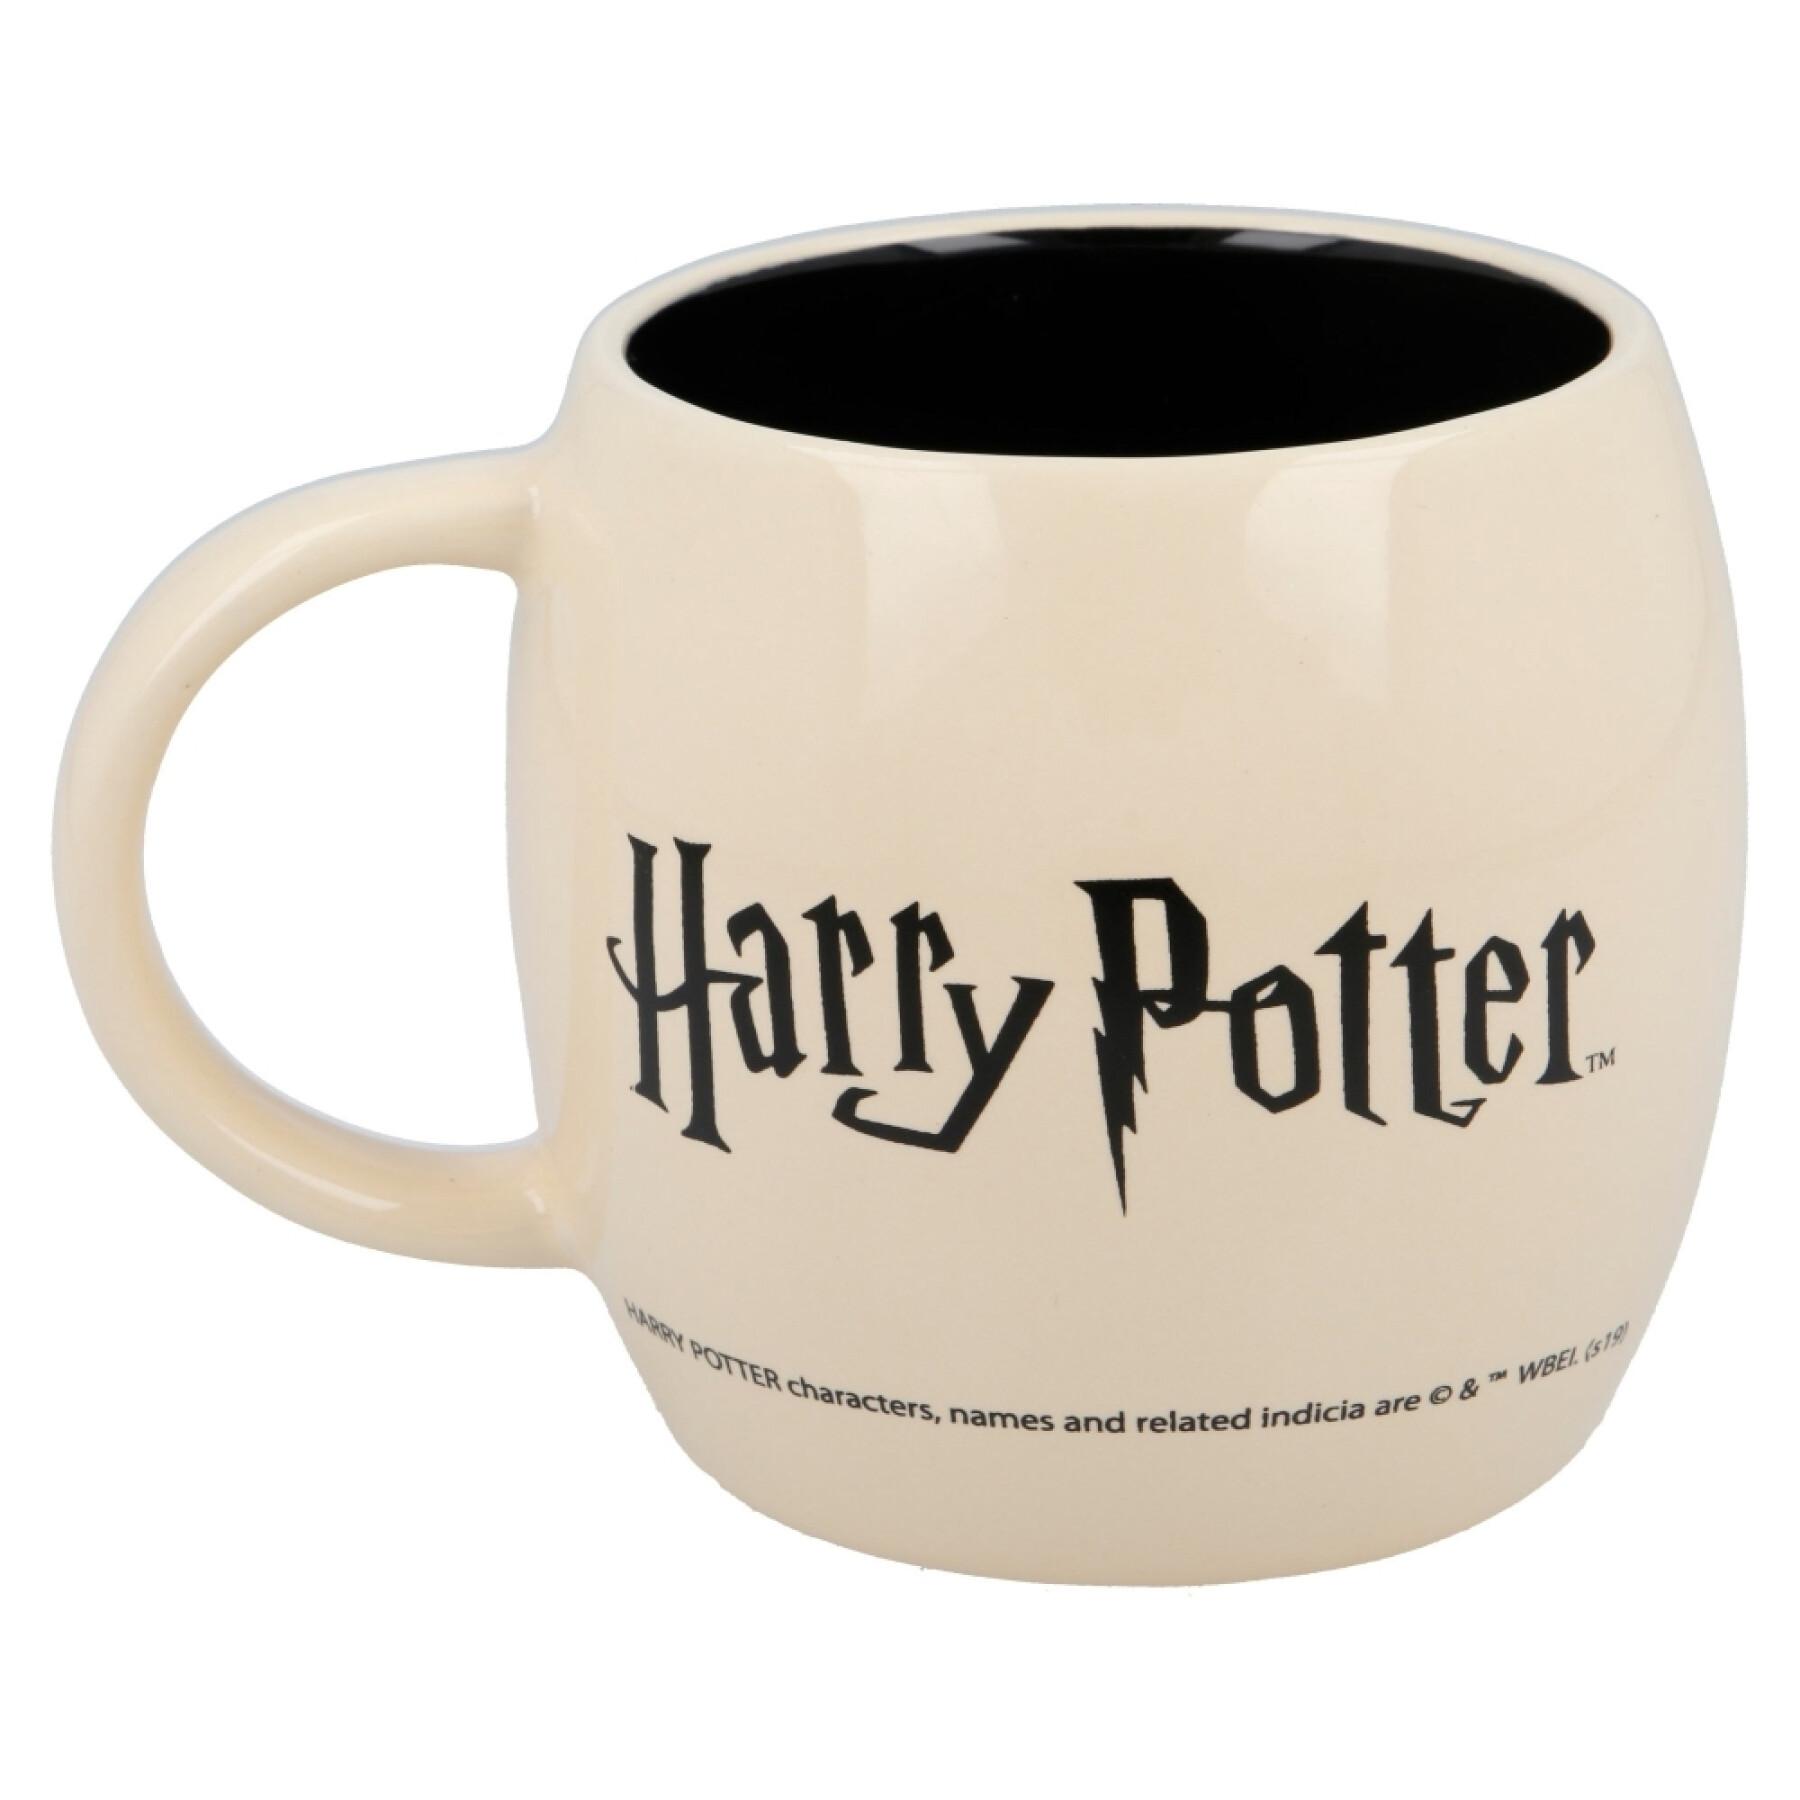 Kubek ceramiczny pudełko upominkowe stor Harry Potter